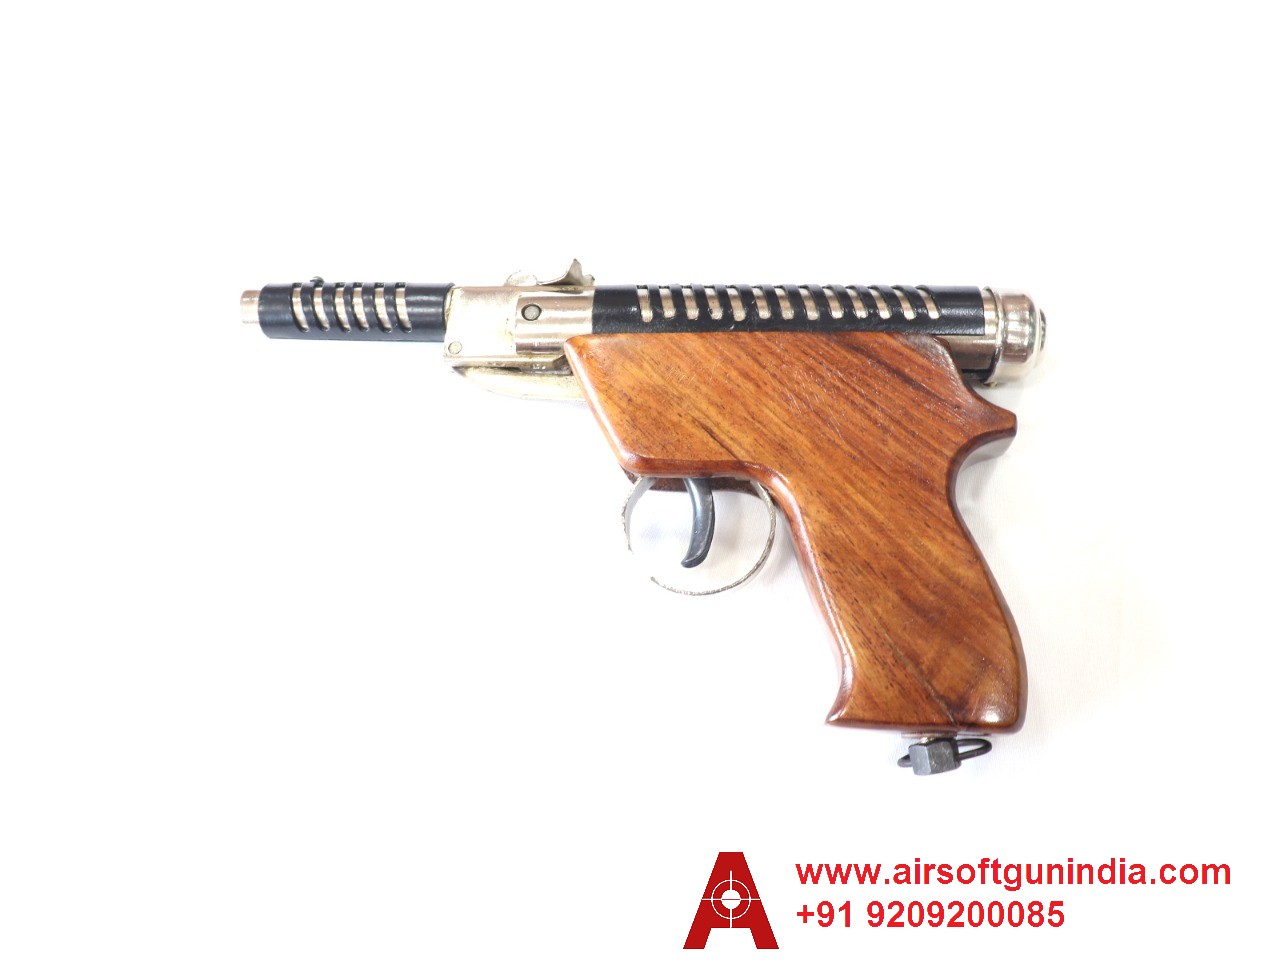 Batman 007 Wooden Single-shot .177 Caliber /  mm Indian Air pistol By  Airsoft Gun India.